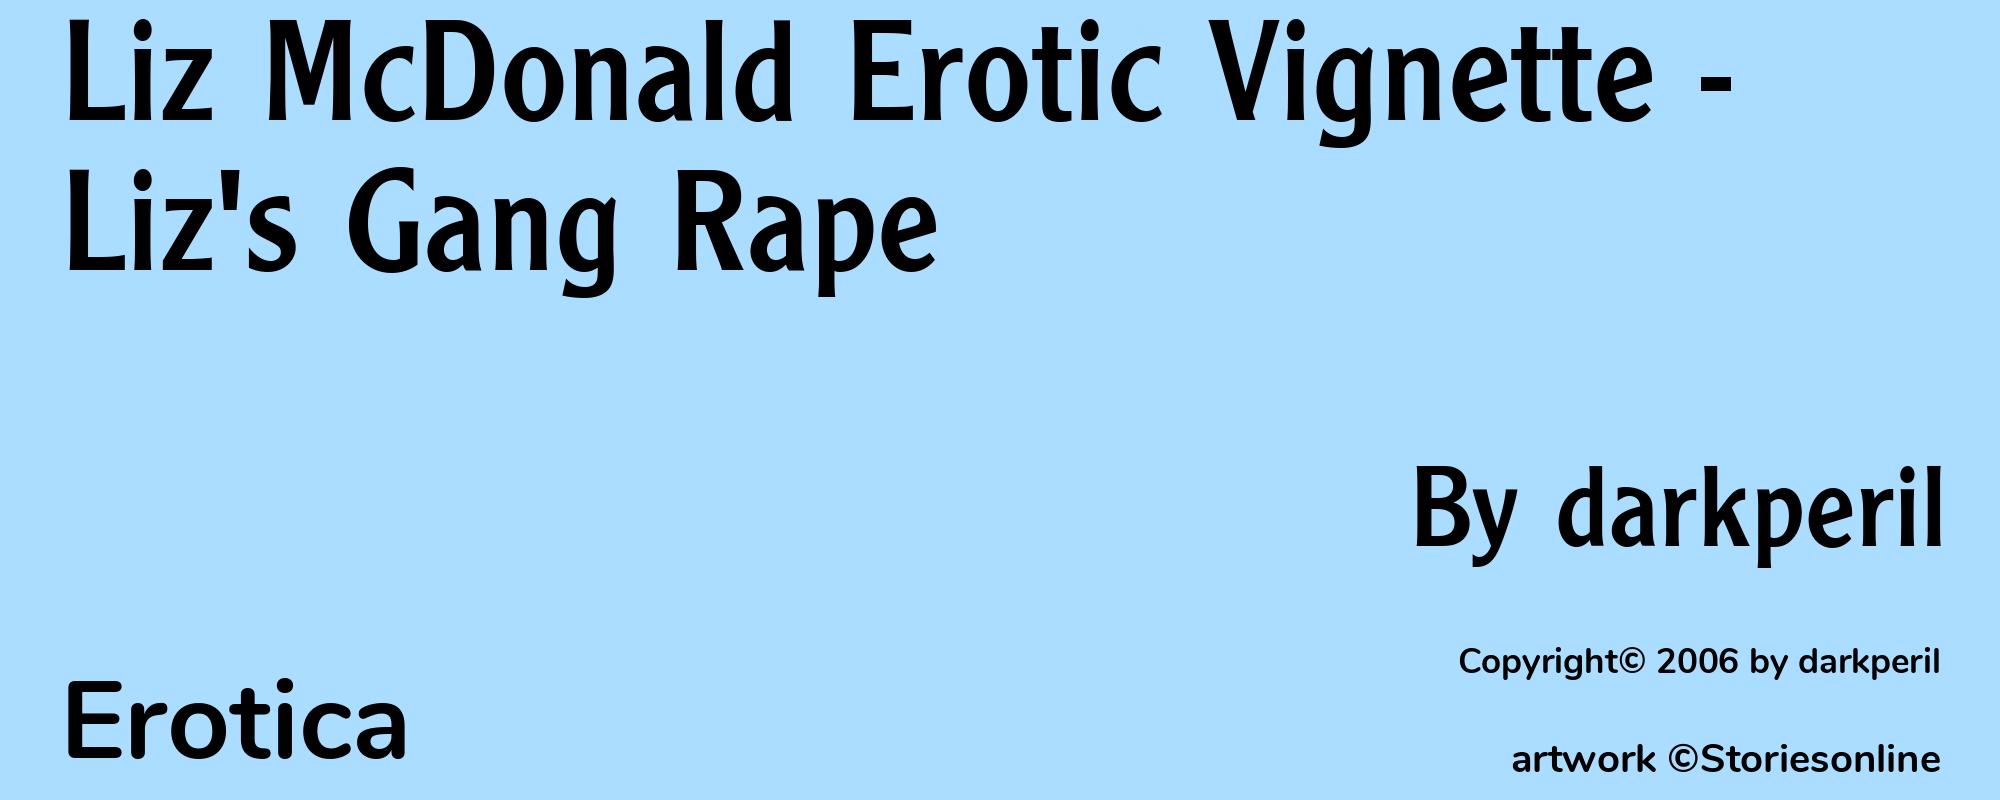 Liz McDonald Erotic Vignette - Liz's Gang Rape - Cover